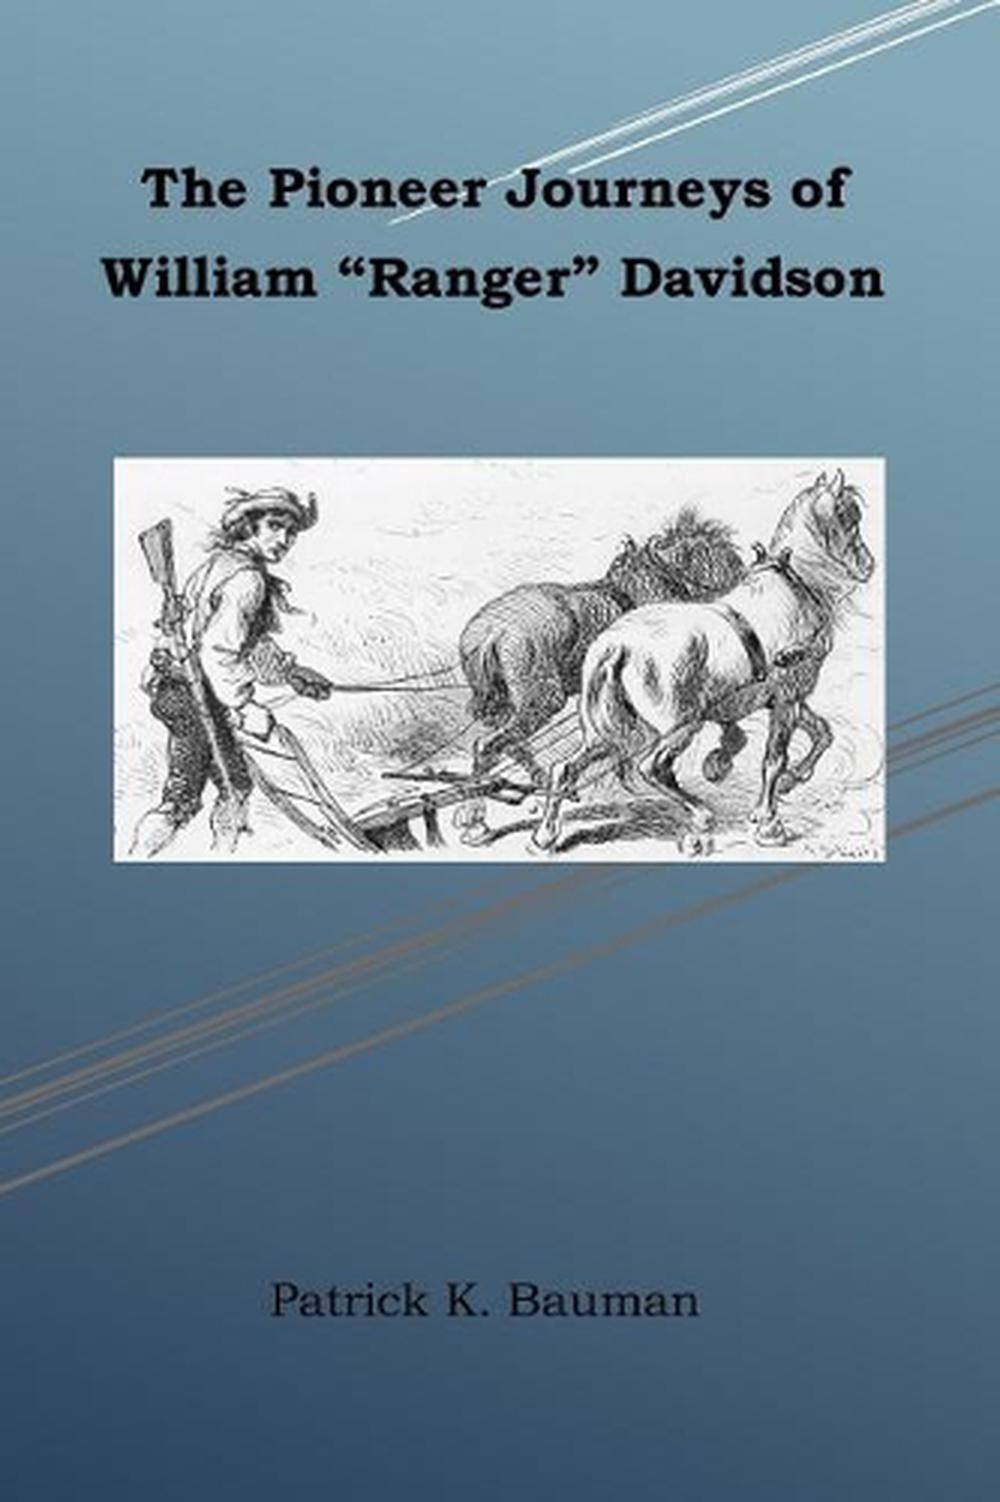 The Pioneer Journeys of William Ranger Davidson by Patrick Bauman ...